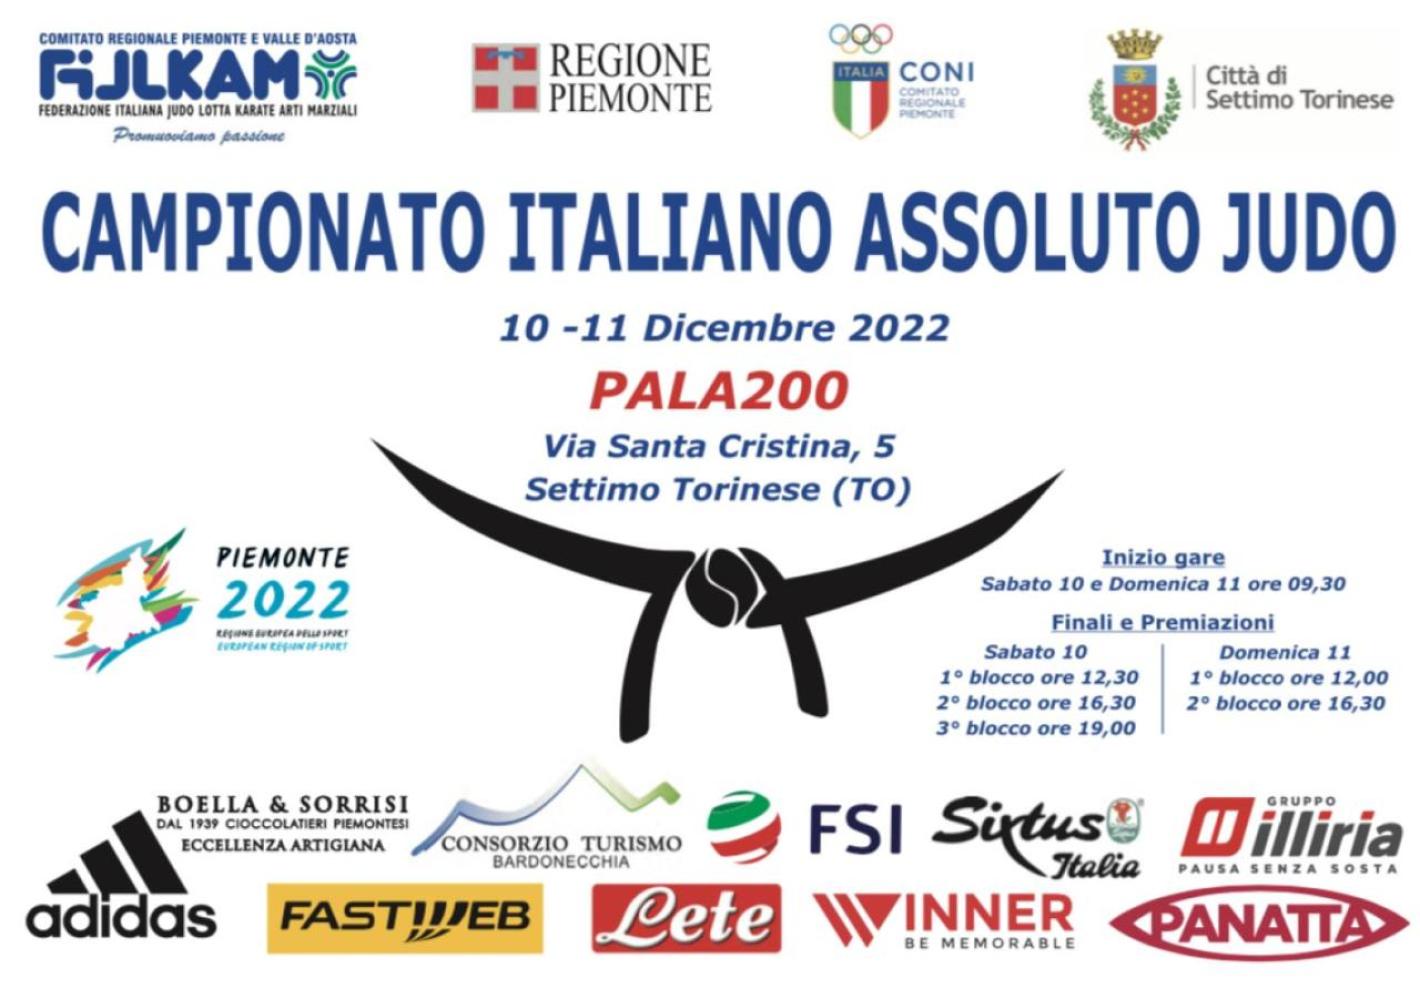 images/friuli_venezia_giulia/2022/medium/CampionatiItalianiAssoluti2022.jpeg